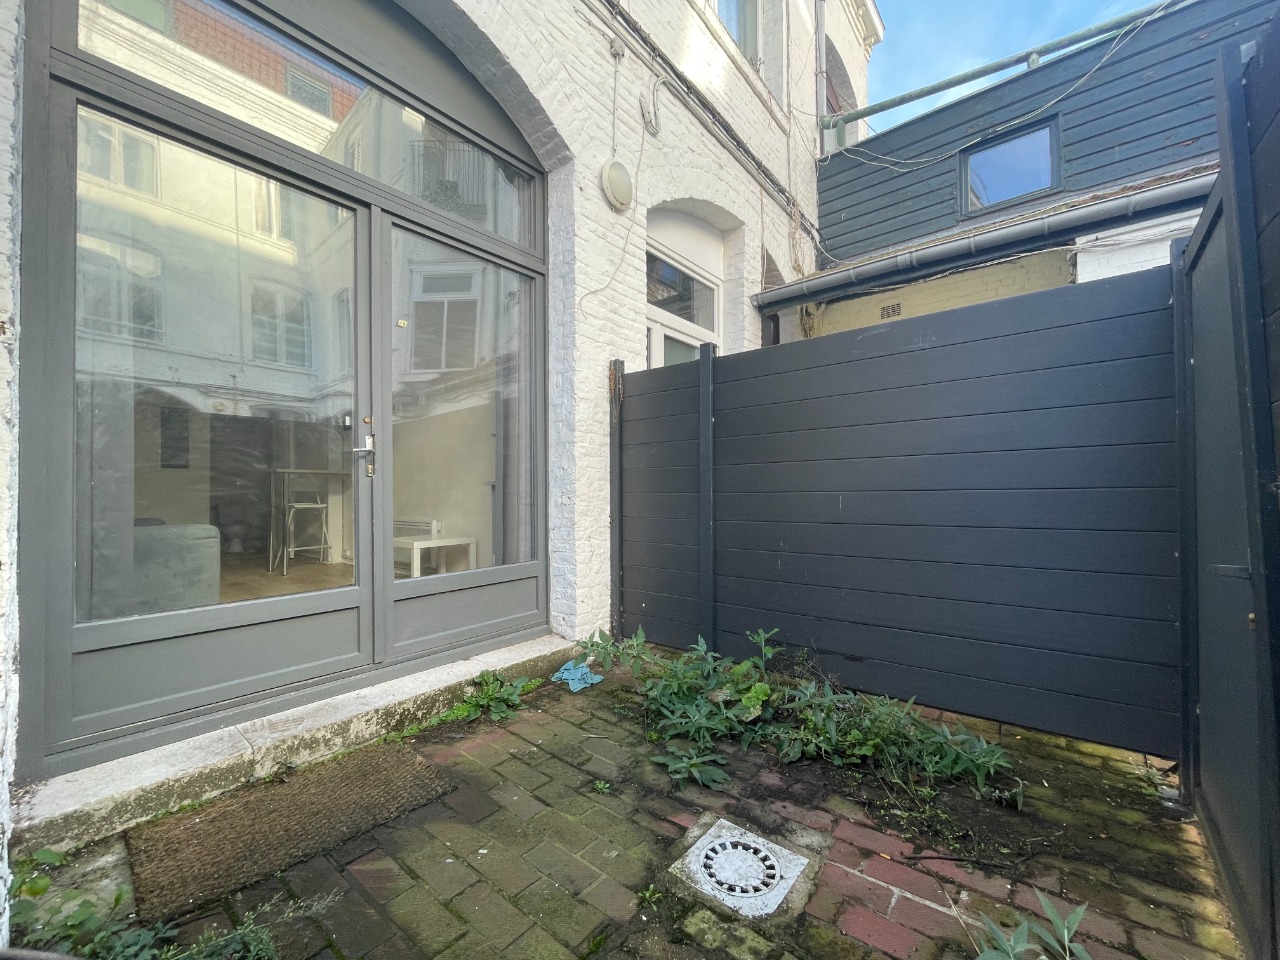 Vente appartement 59000 Lille - Charmant F1 avec terrasse